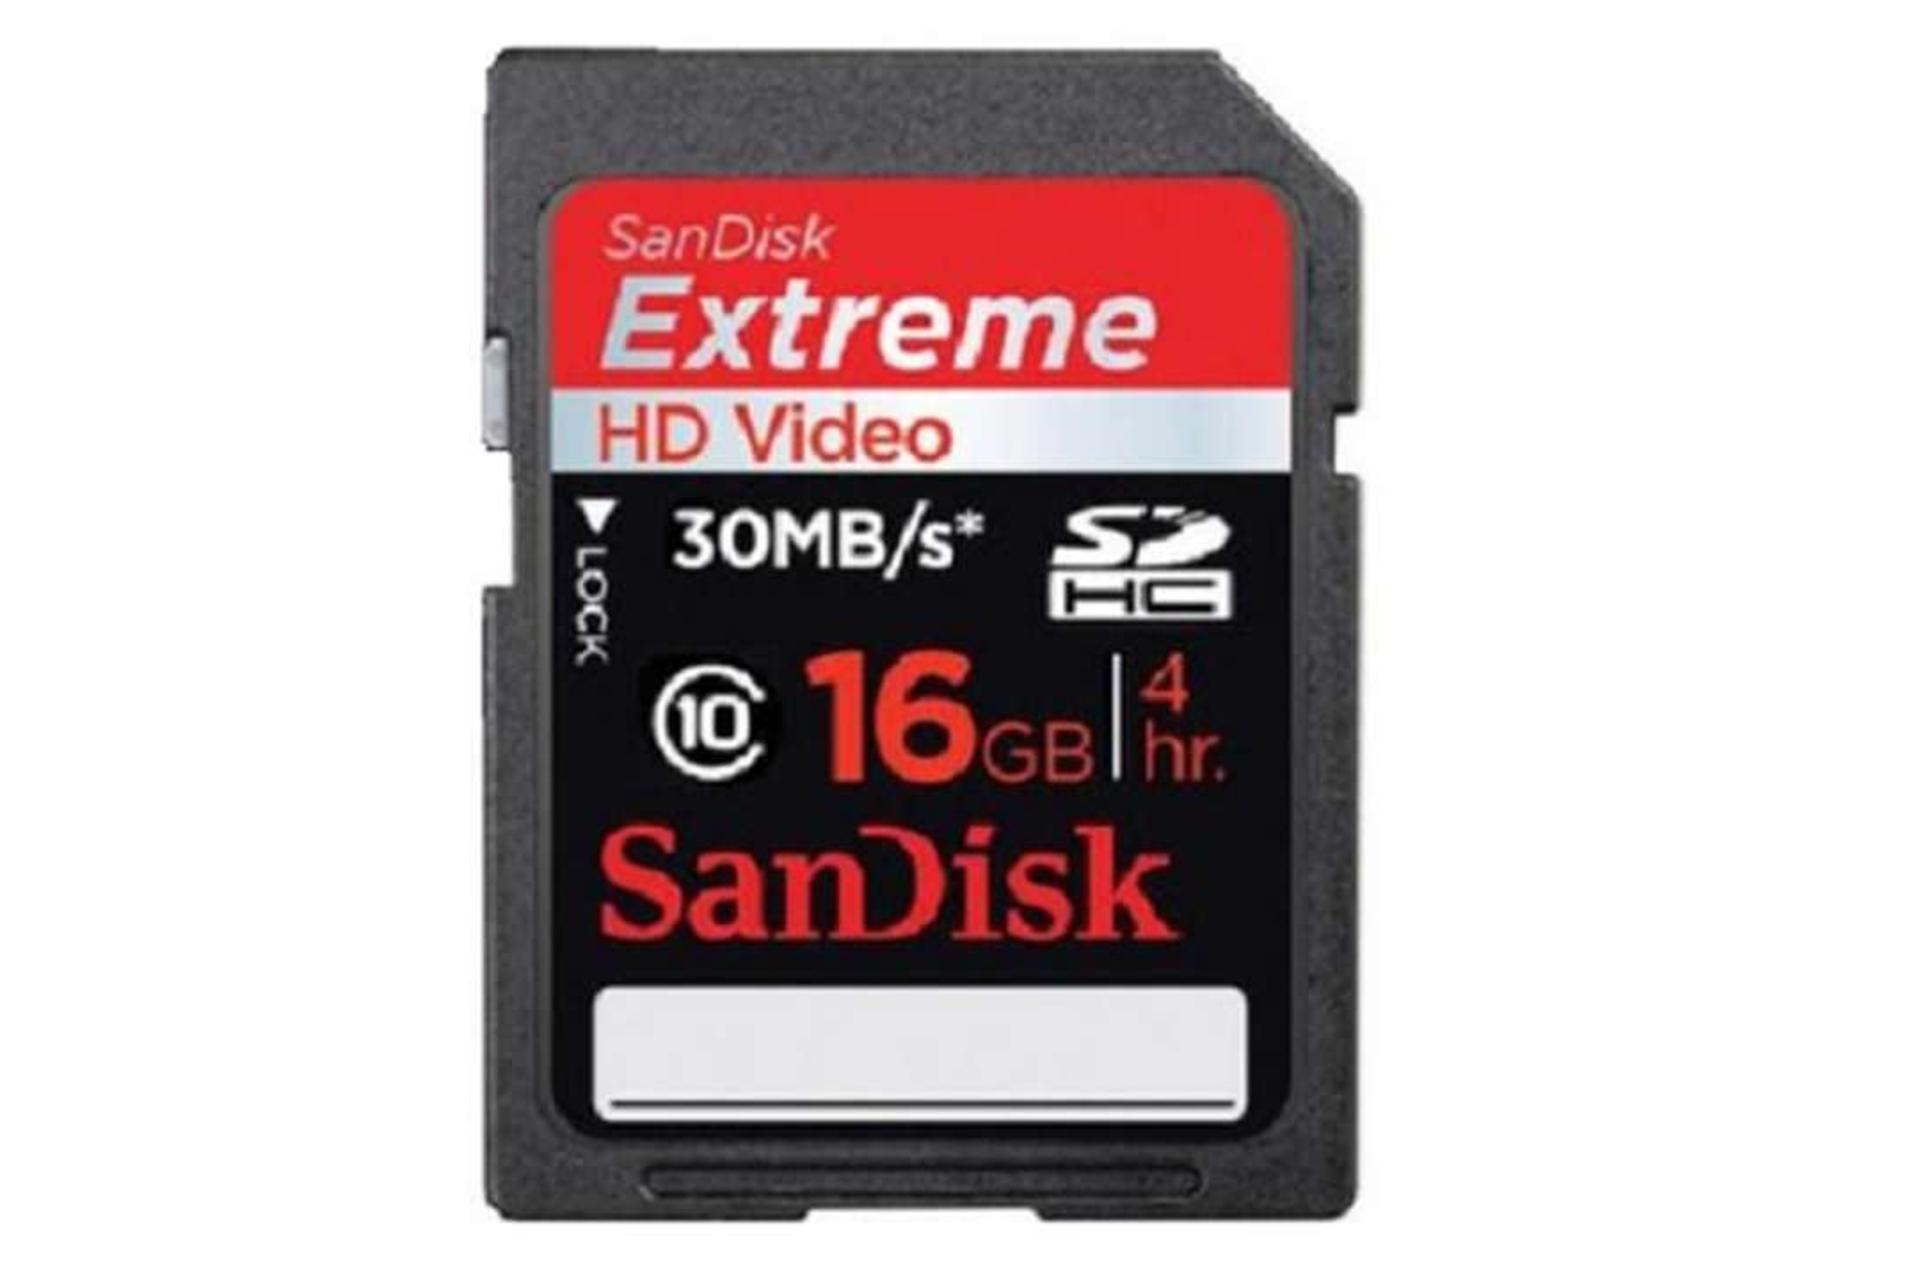 SanDisk Extreme HD Video SDHC Class 10 UHS-I U1 16GB